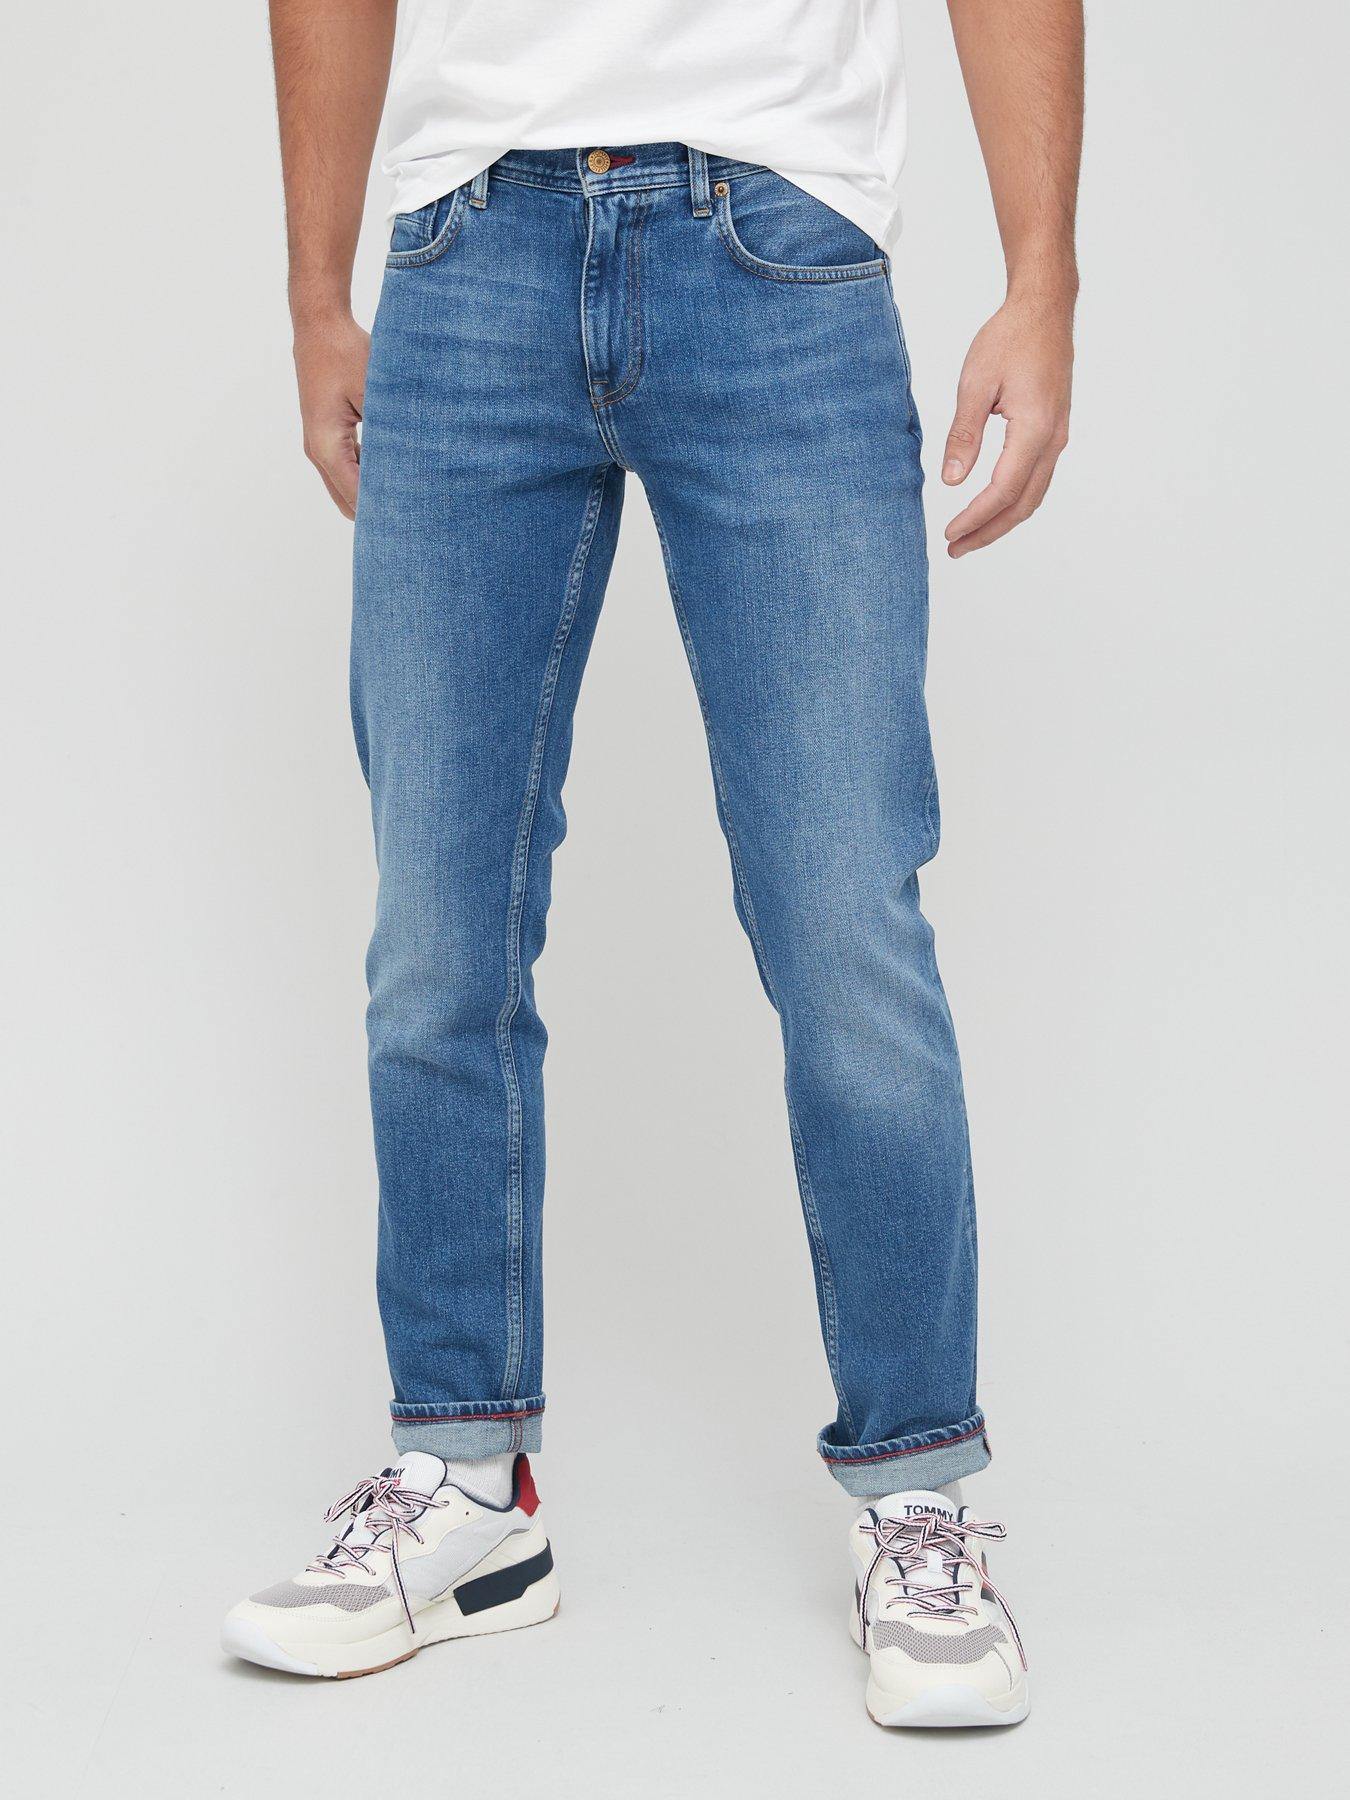 Tommy Hilfiger Denton Straight Fit Stretch Jeans Blue | littlewoods.com